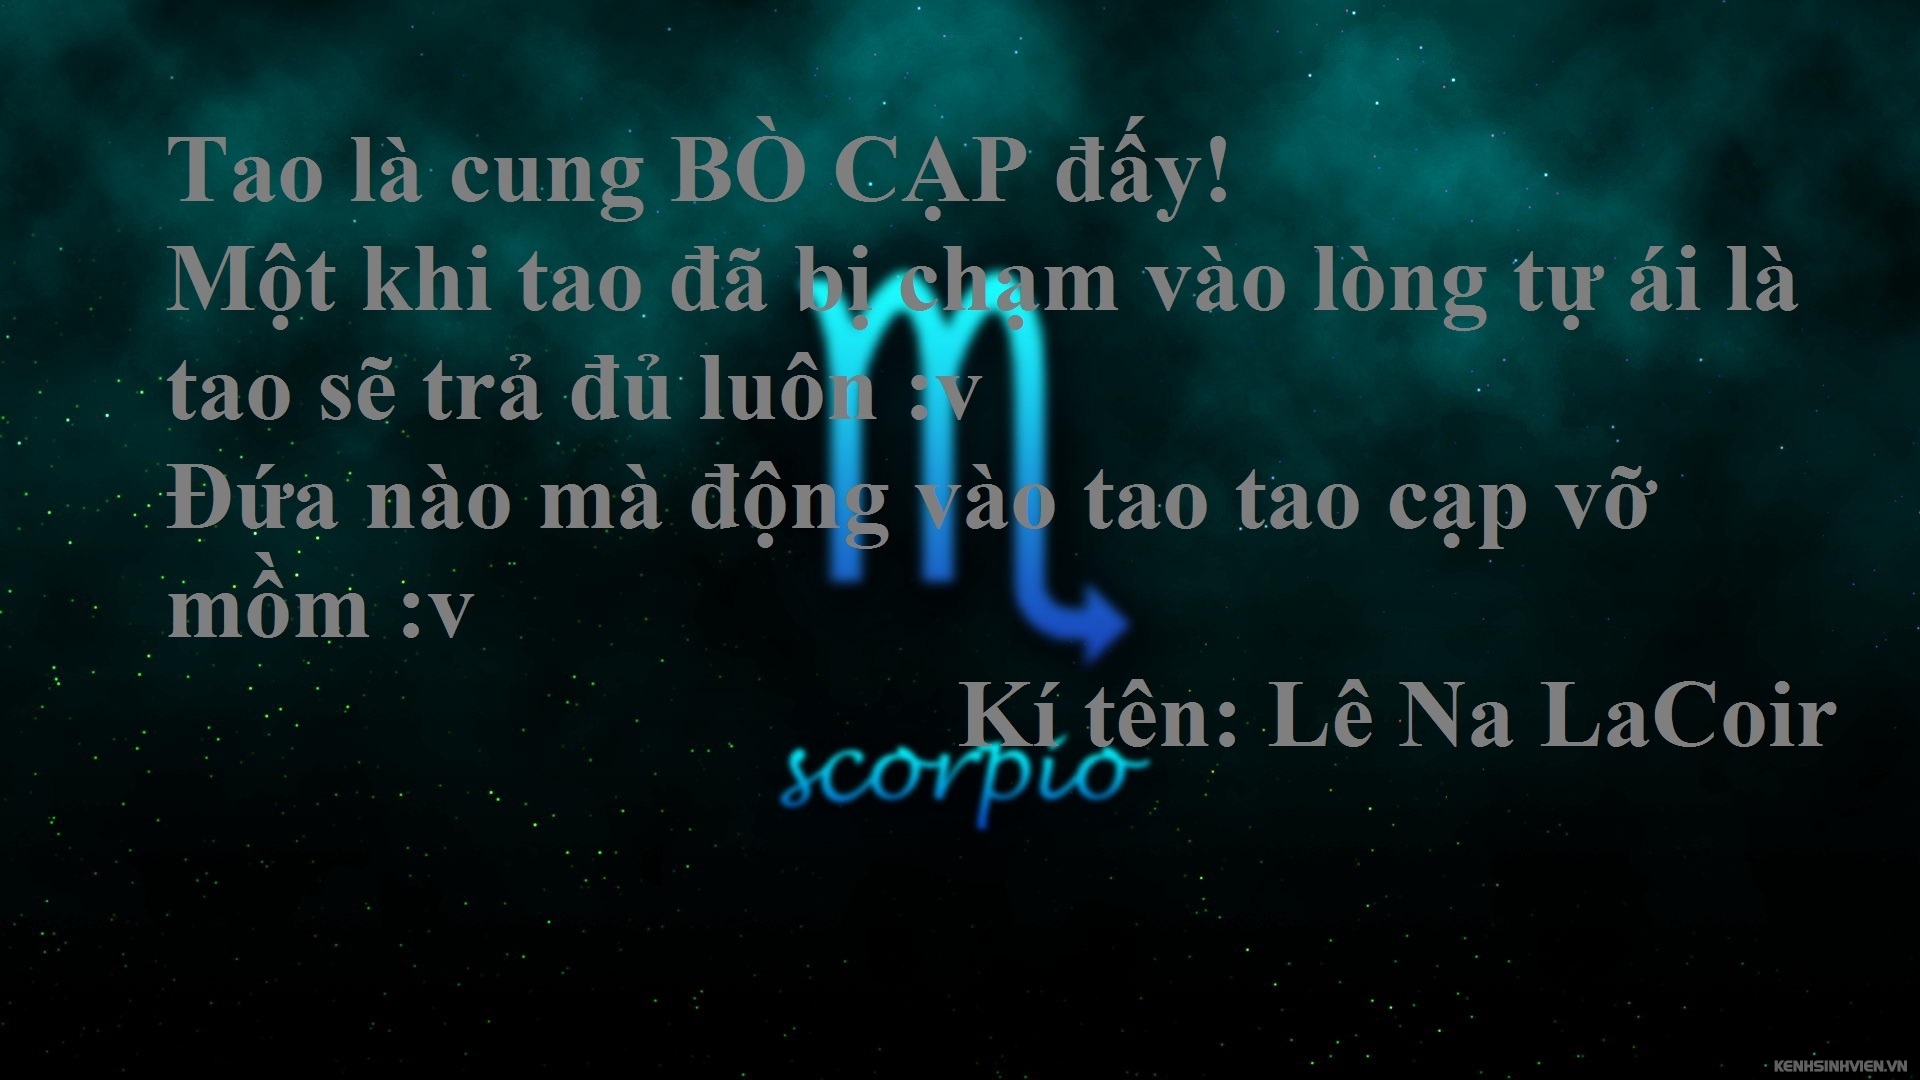 scorpio-zodiac-hd-wallpaper-1-for-desktop-background-1.jpg